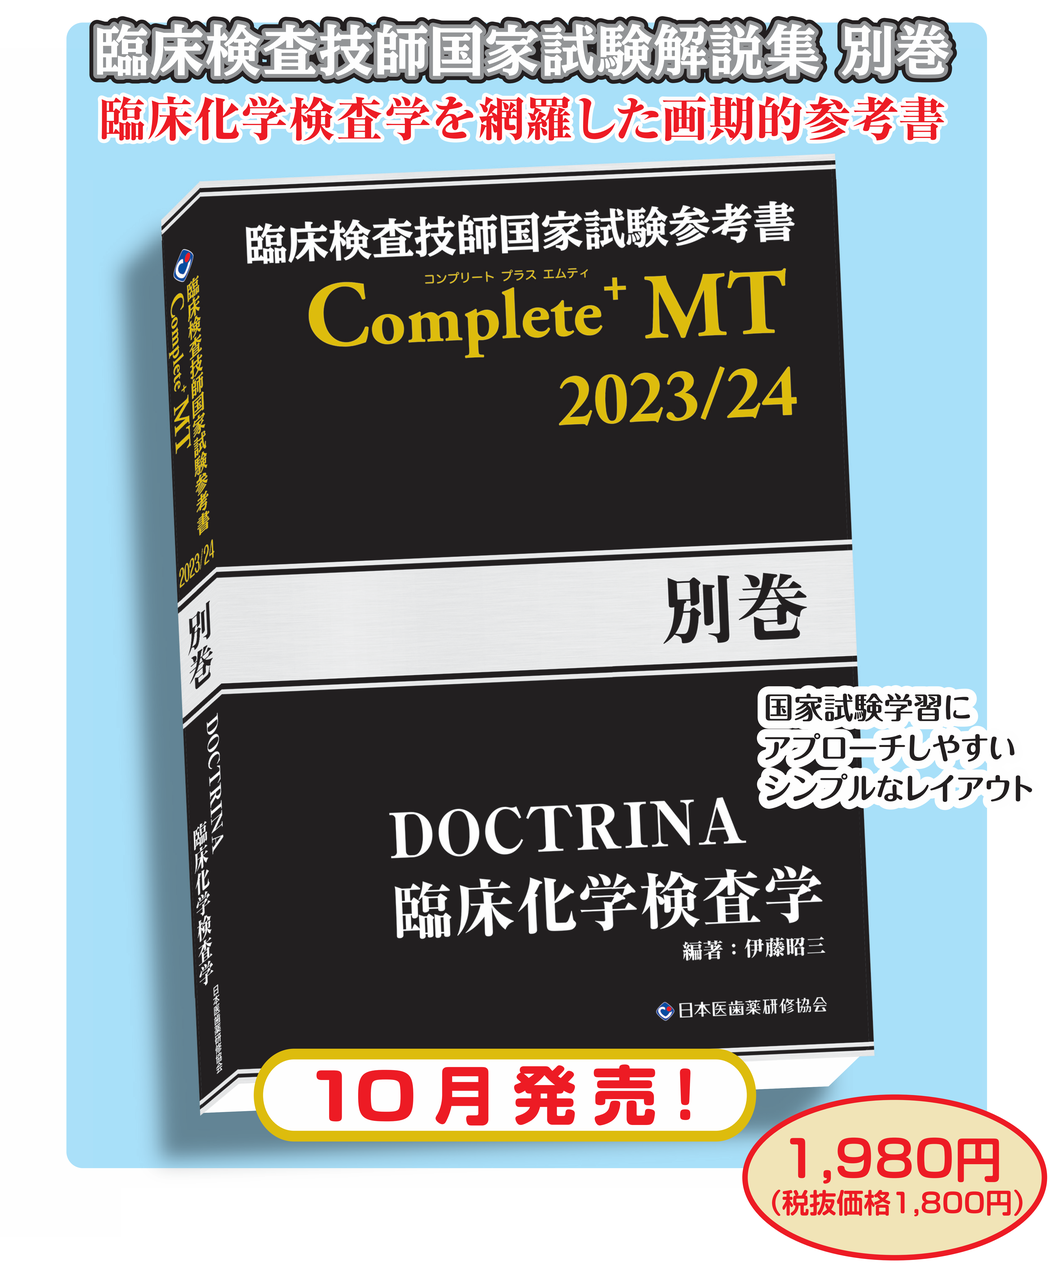 Complete+MT別巻 DOCTRINA臨床化学検査学 - 臨床検査技師国家試験対策